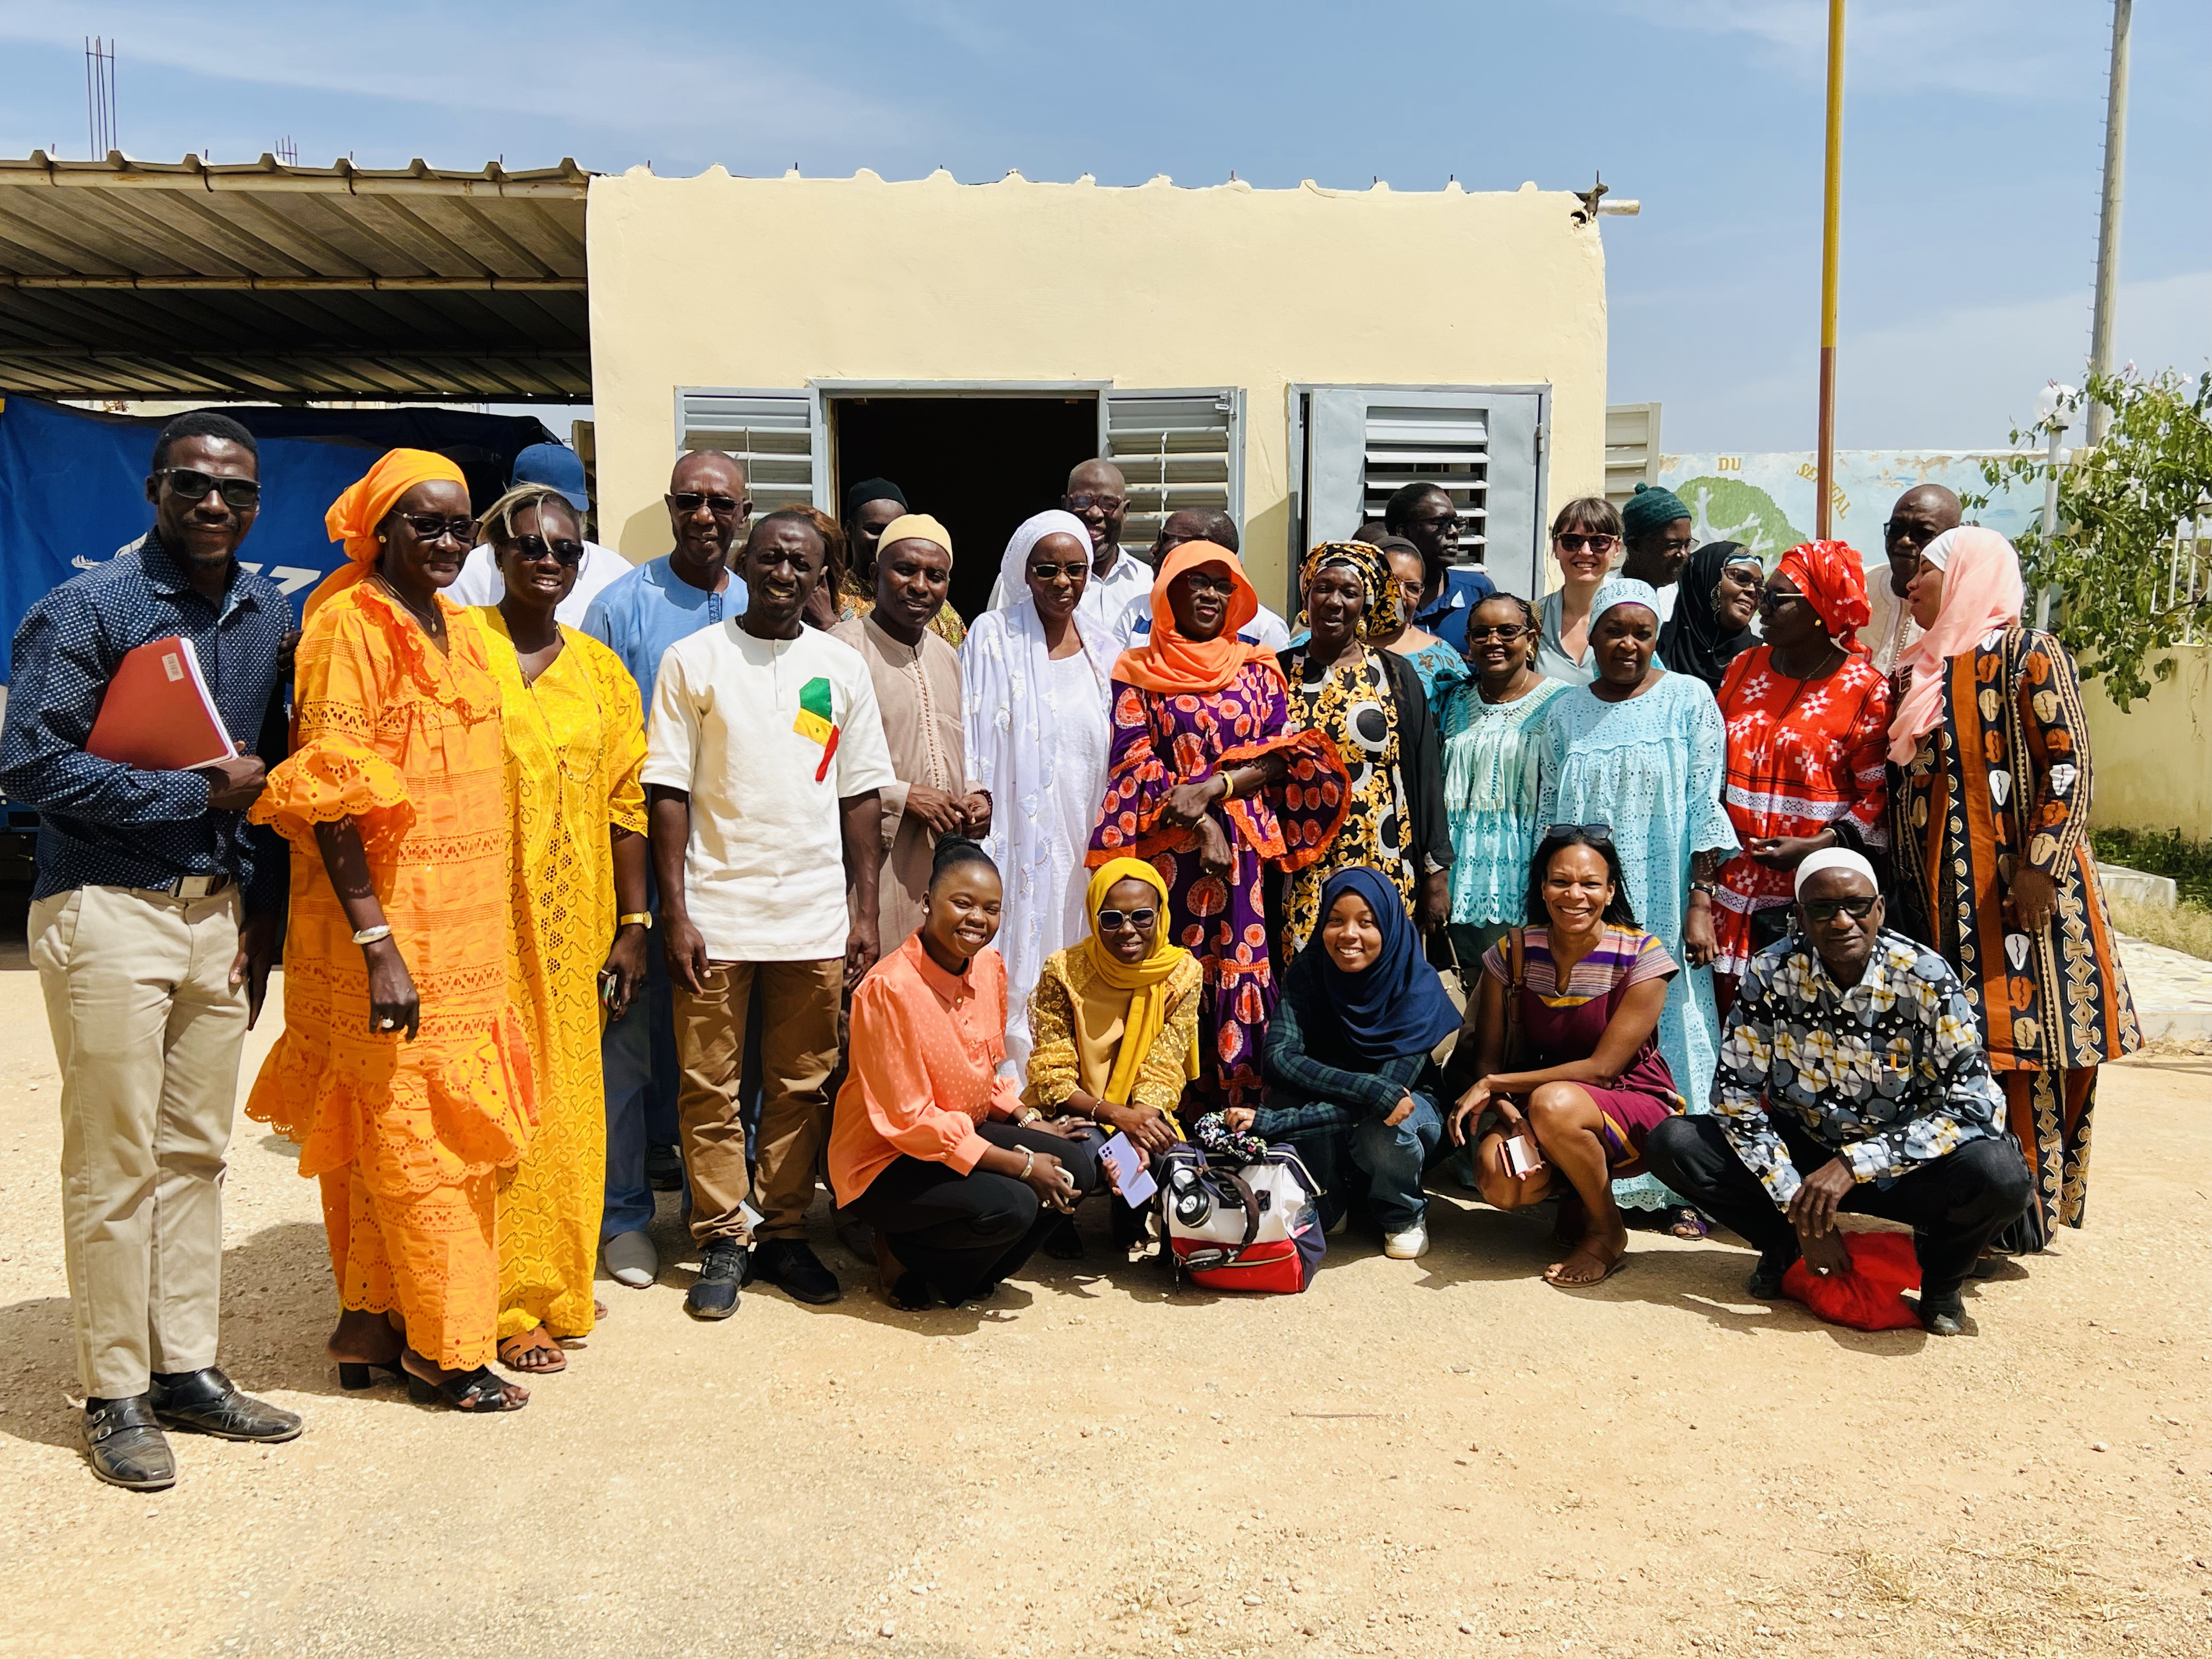 Spotlight on SOCODEVI’s activities in Senegal